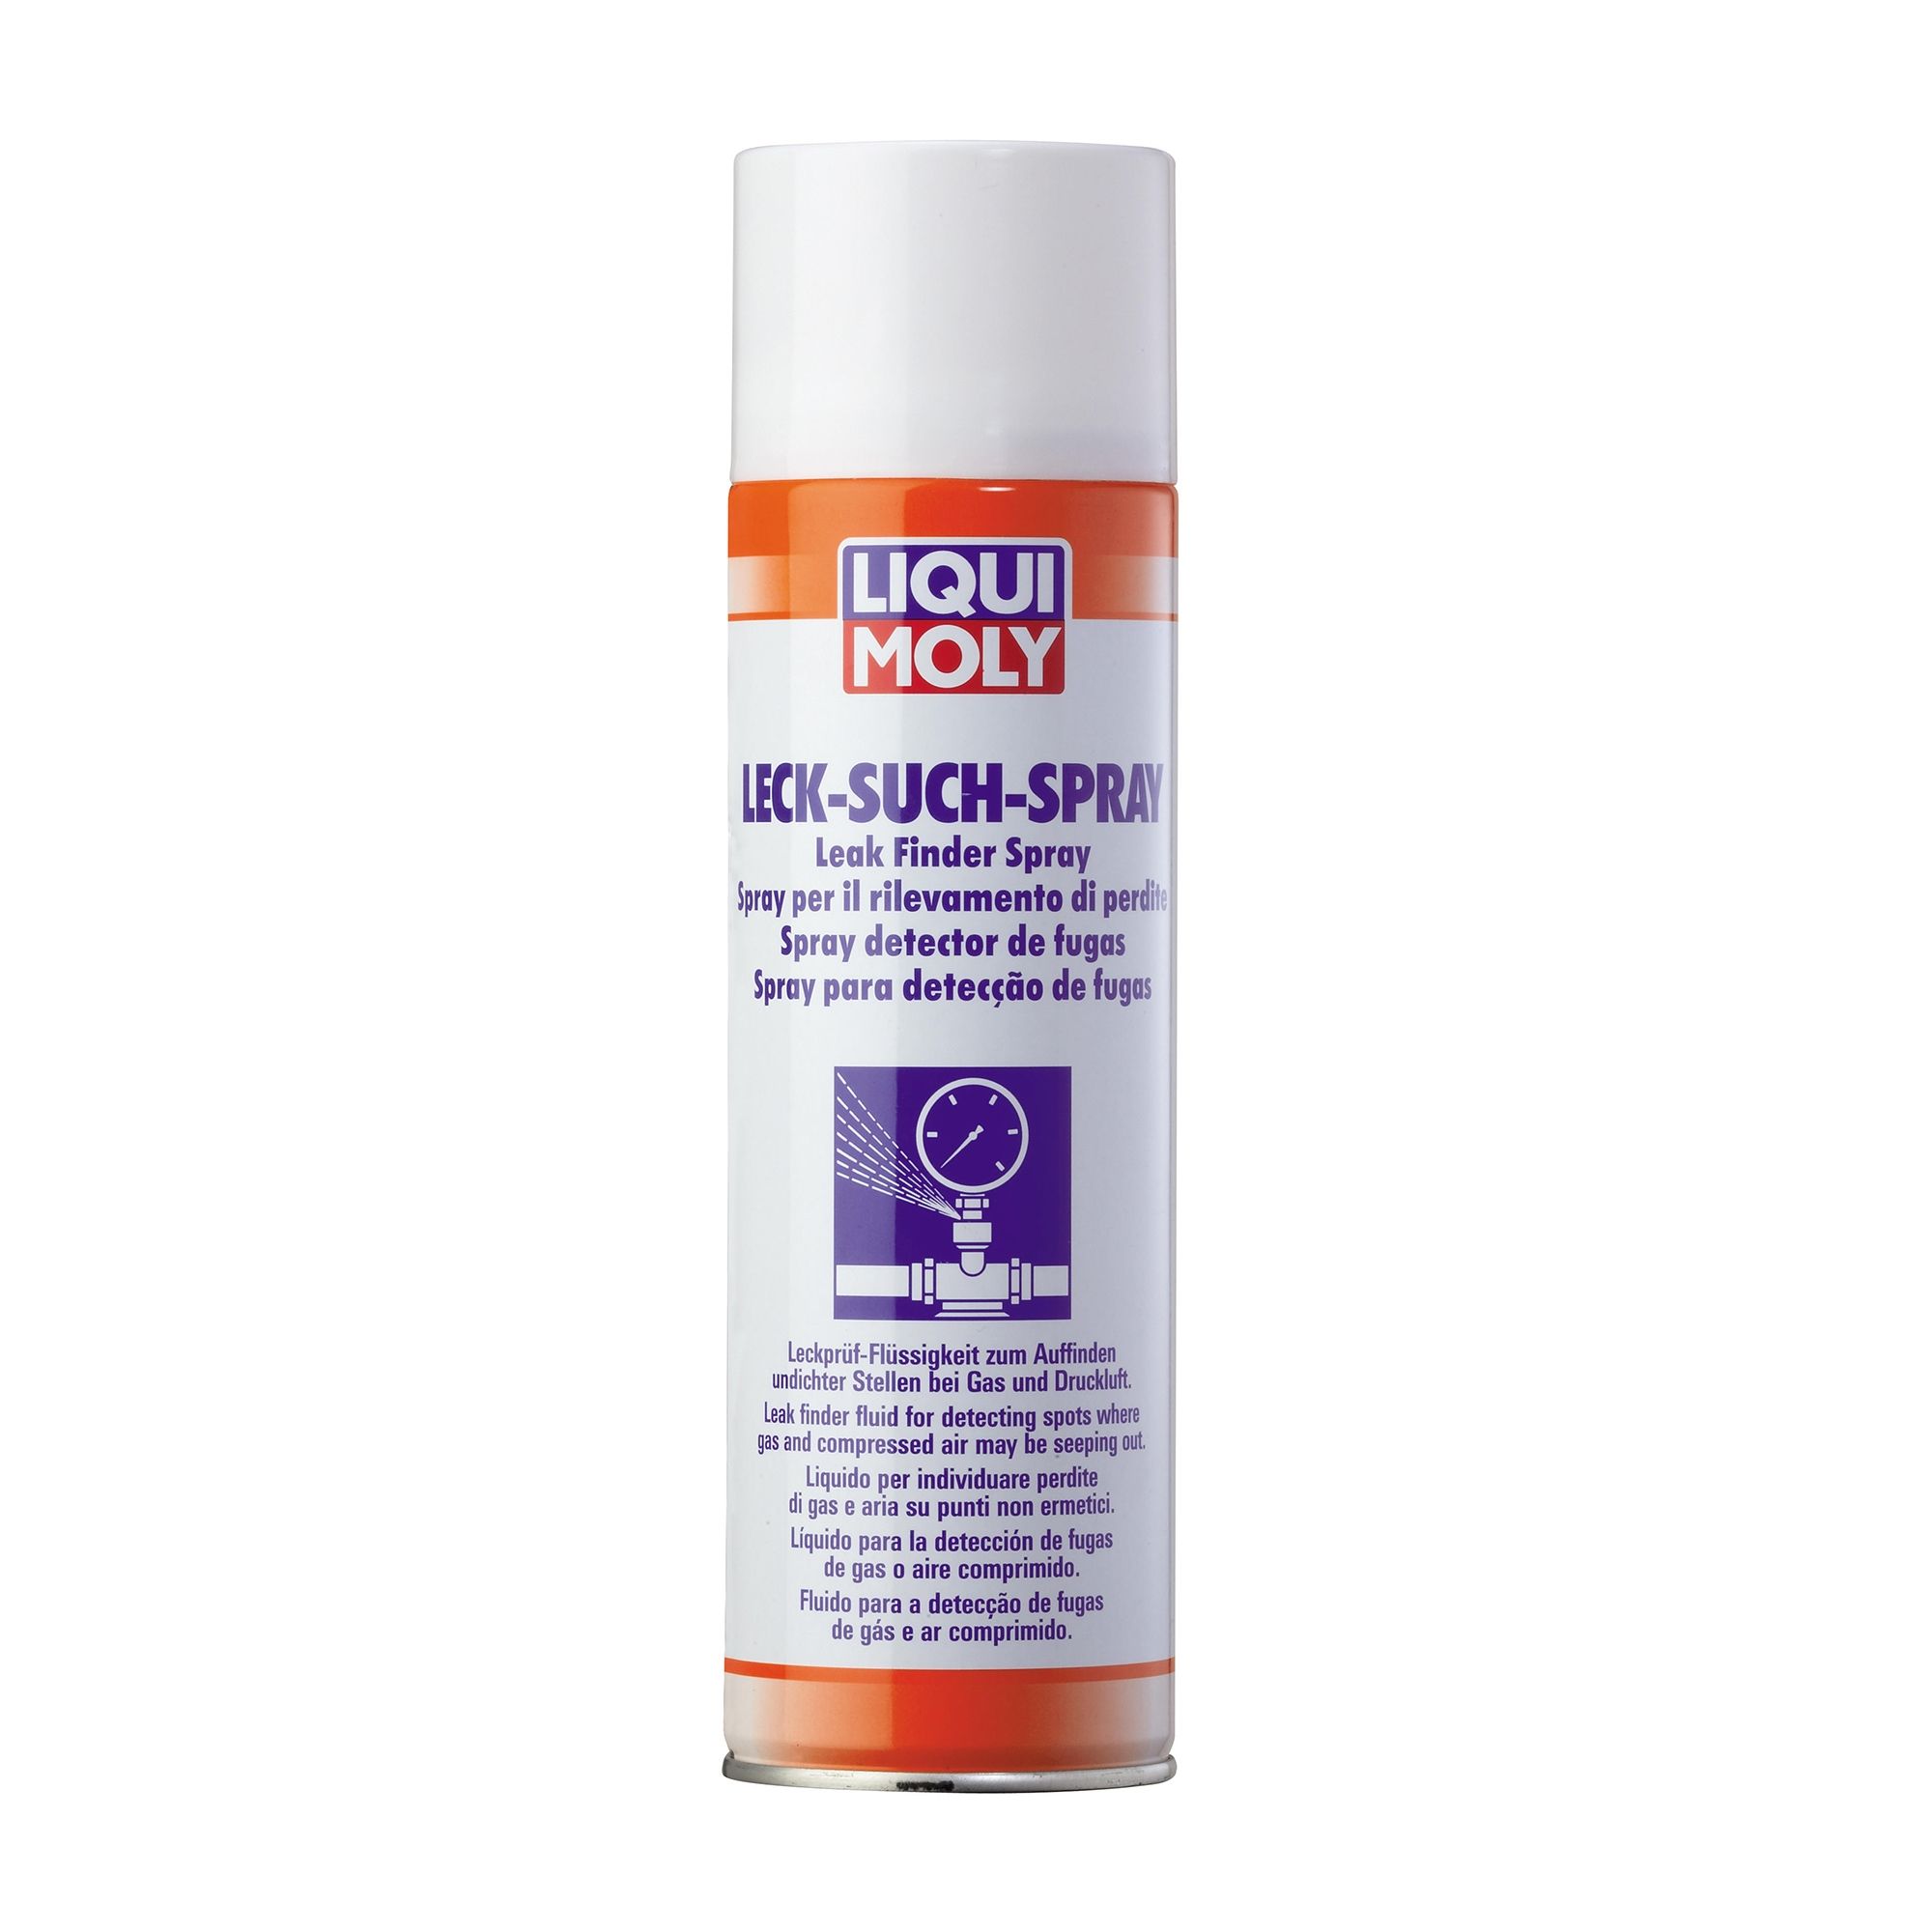 Liqui Moly Leck-Such-Spray 400 ml bei ATO24 ❗